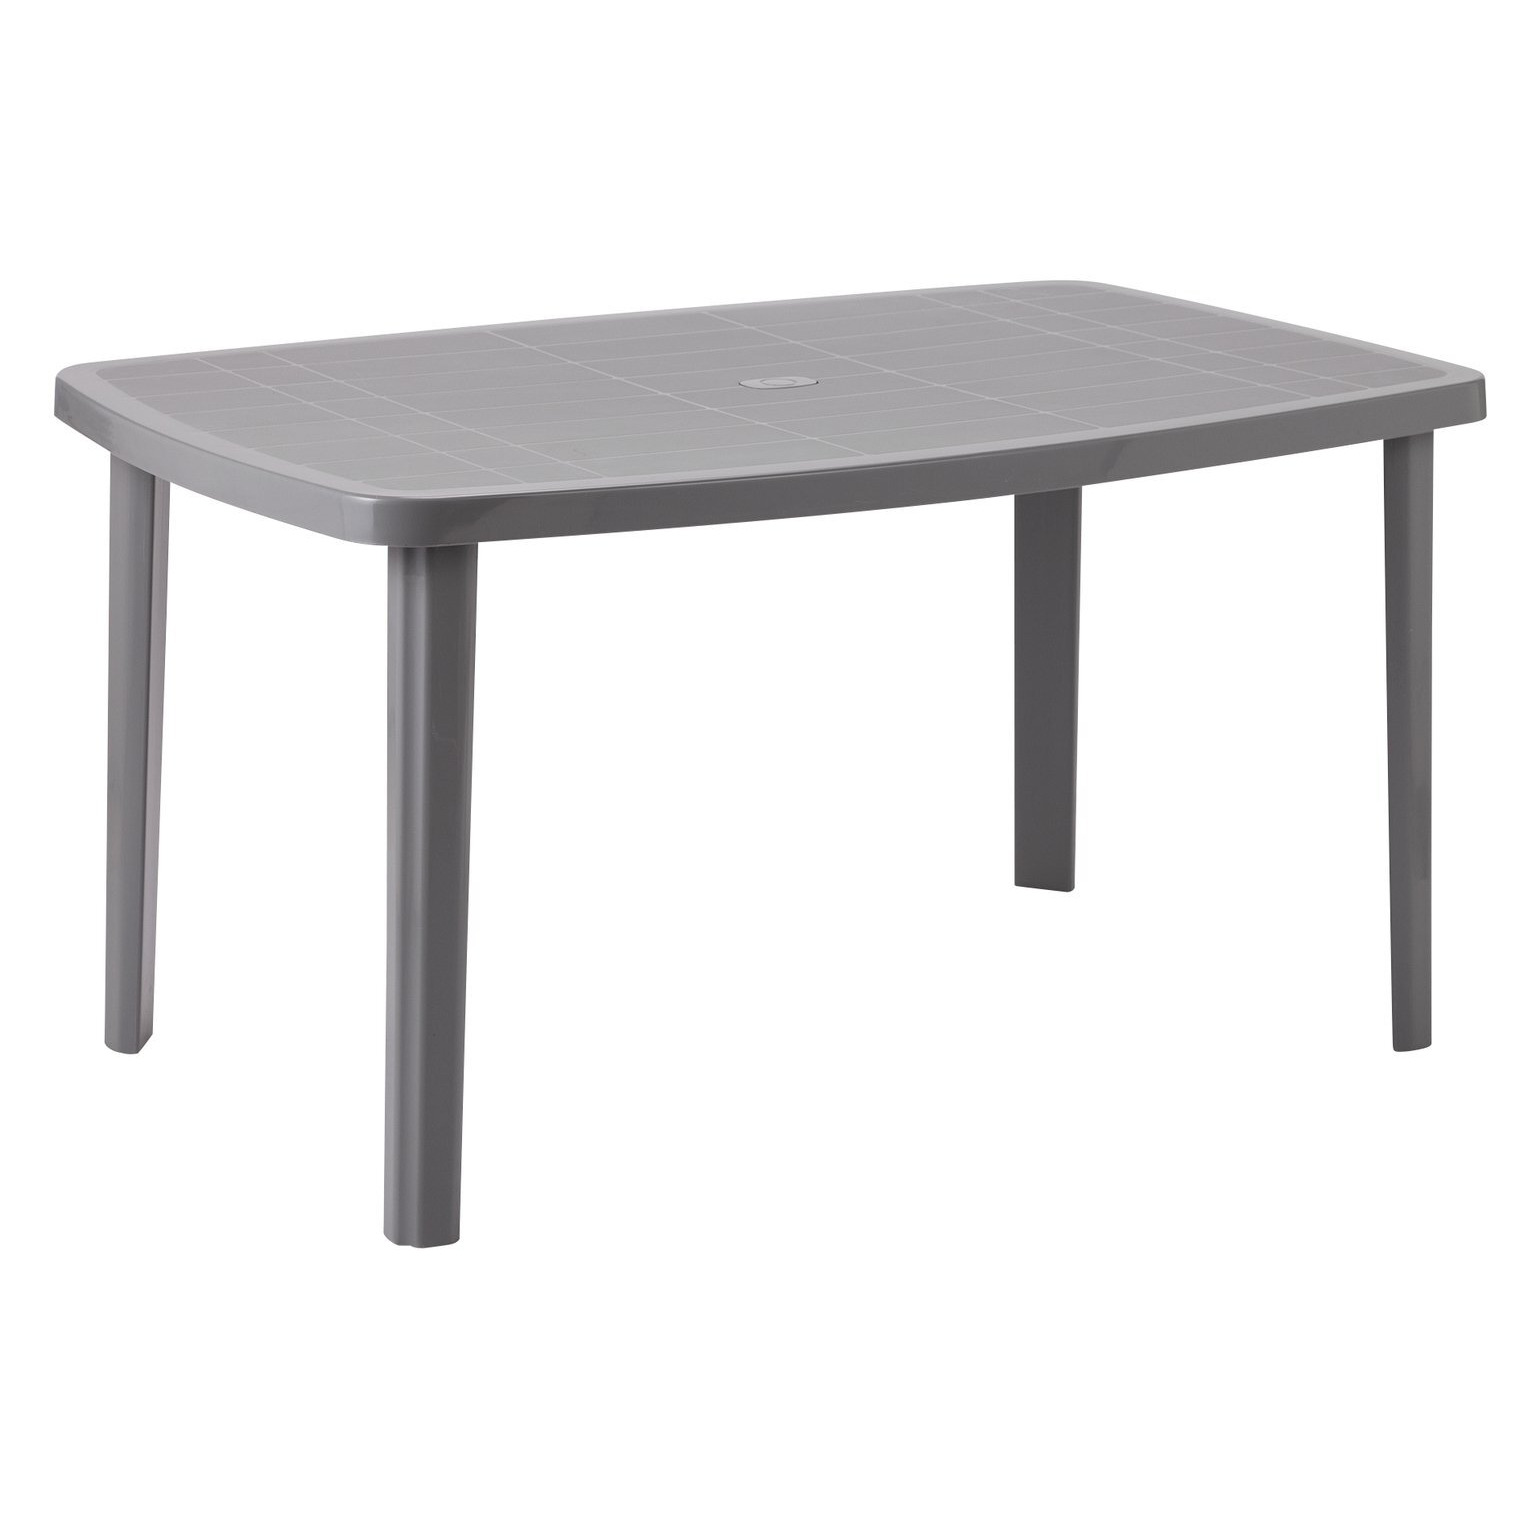 Argos Home 6 Seater Rectangular Plastic Garden Table - Grey - image 1